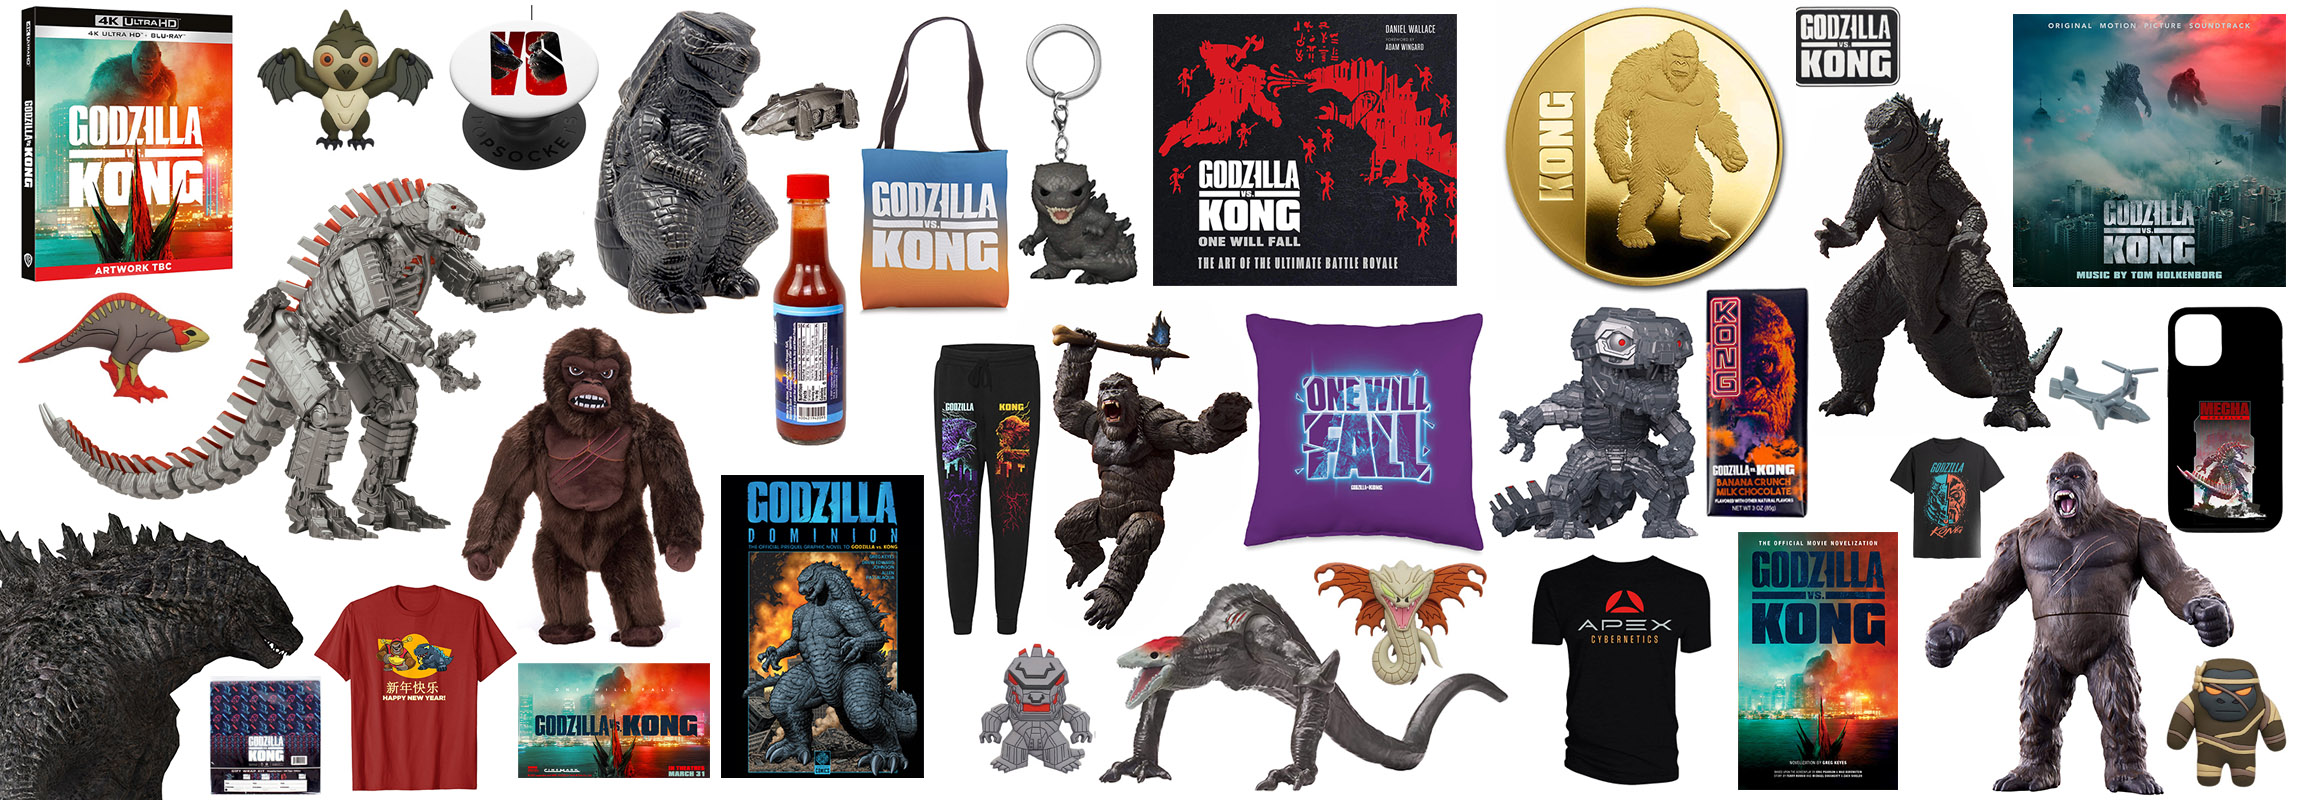 https://www.scifijapan.com/images/Godzilla/GodzillavsKong-products01.jpg